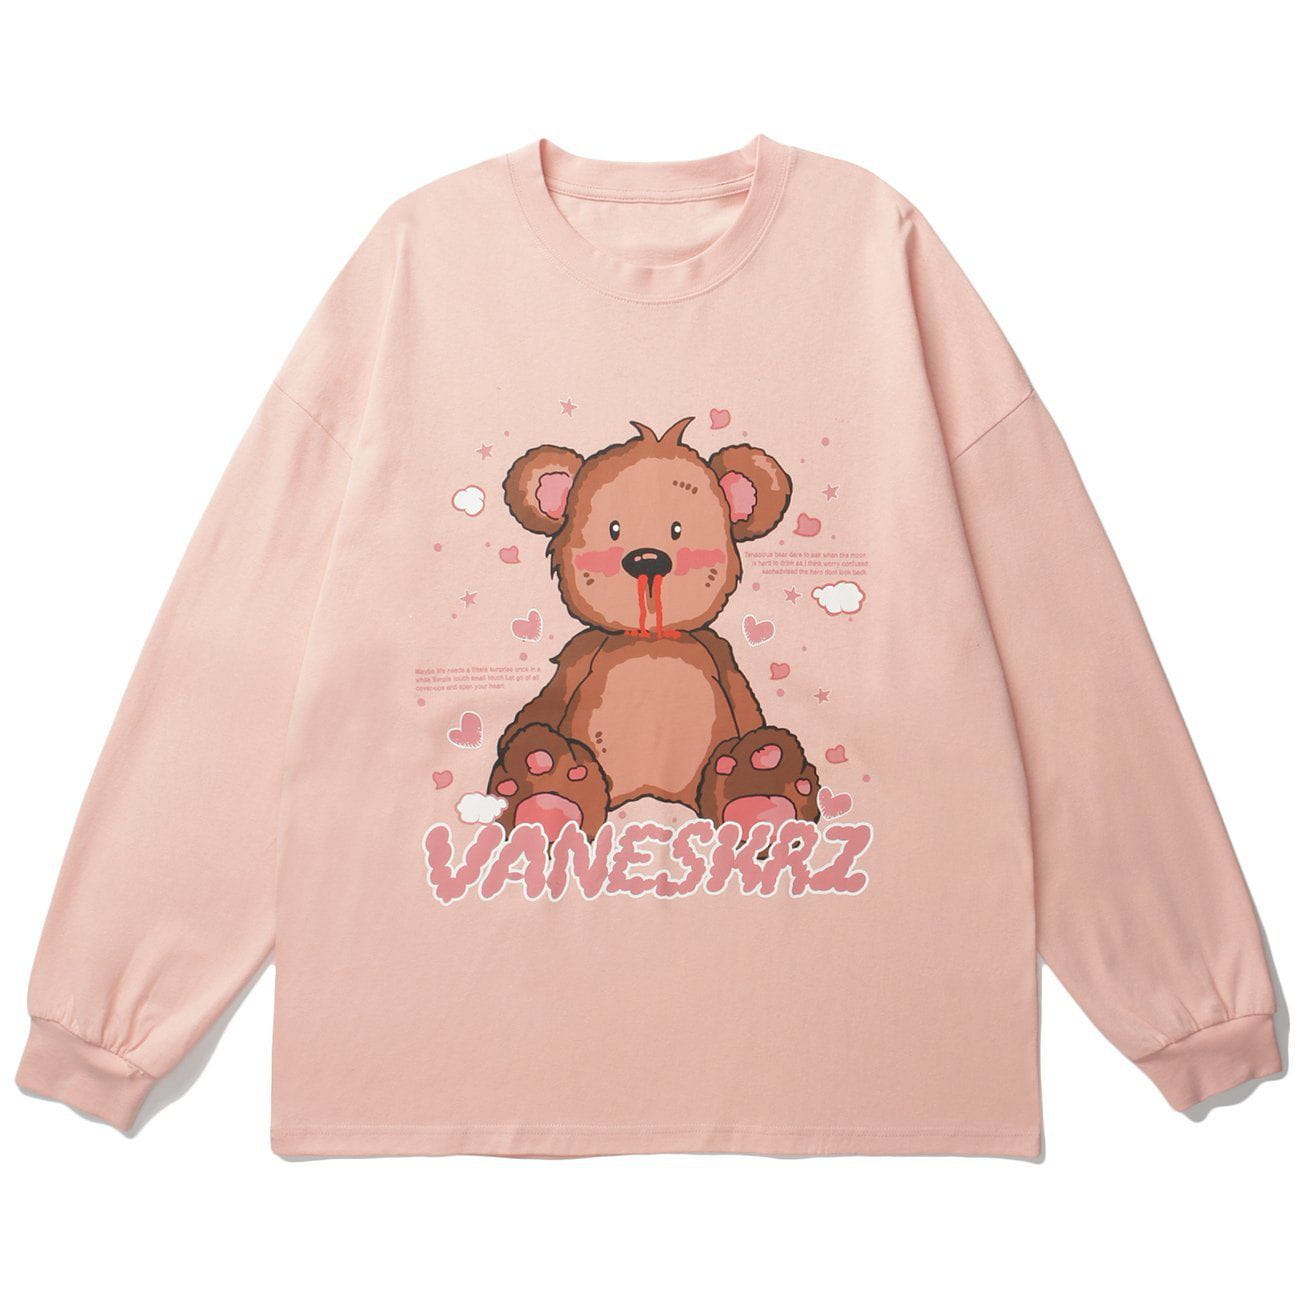 LUXENFY™ - Bear Heart Letter Graphic Sweatshirt luxenfy.com